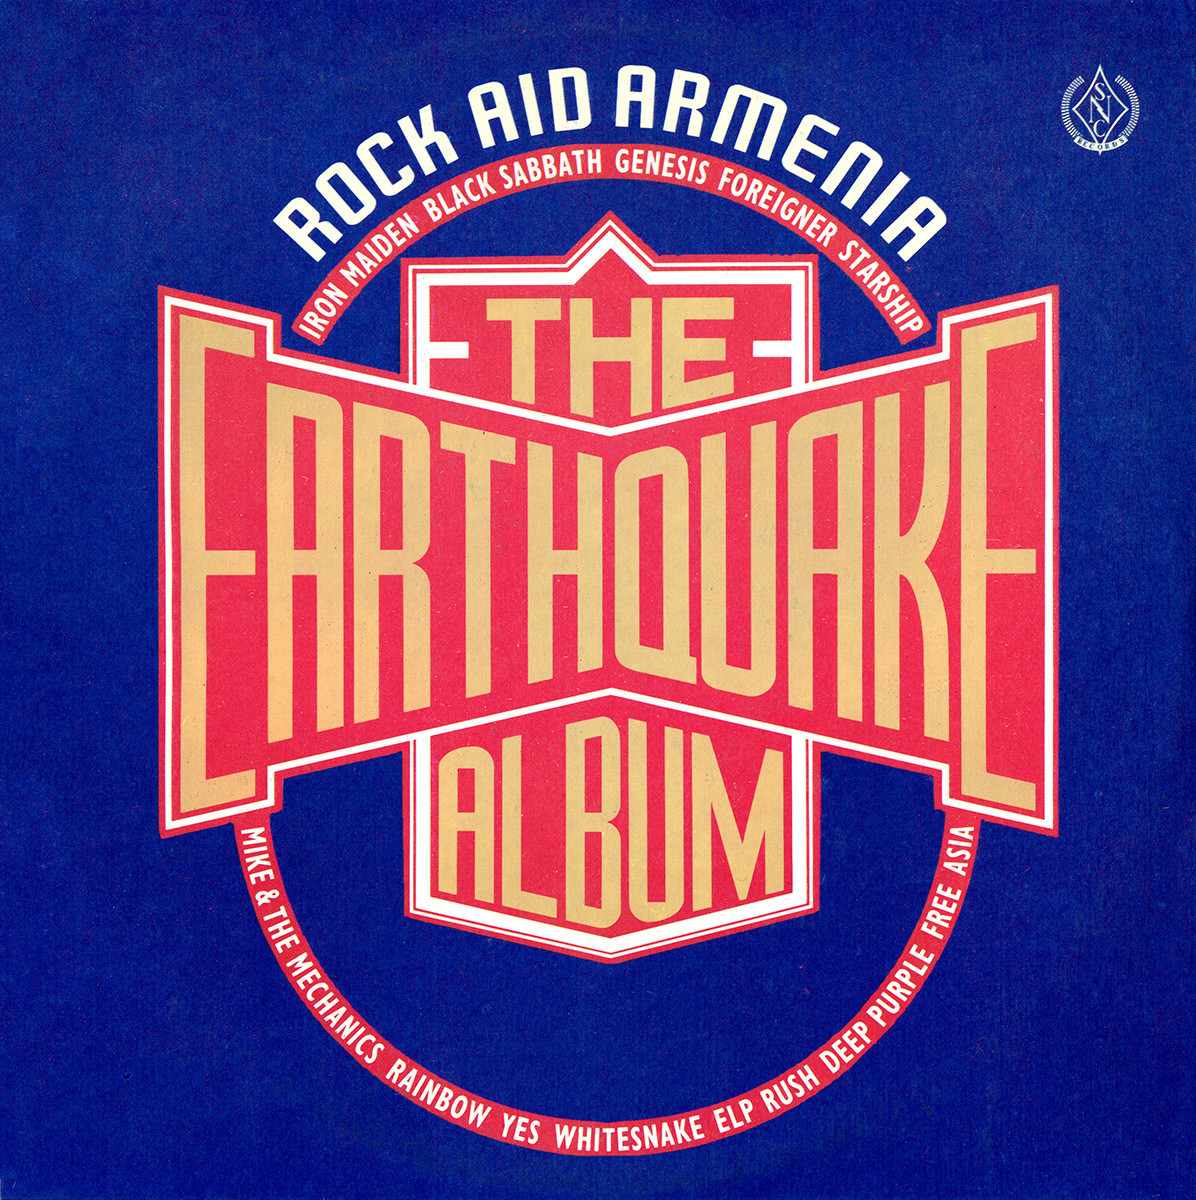 ROCK AID ARMENIA. «The Earthquake Album»